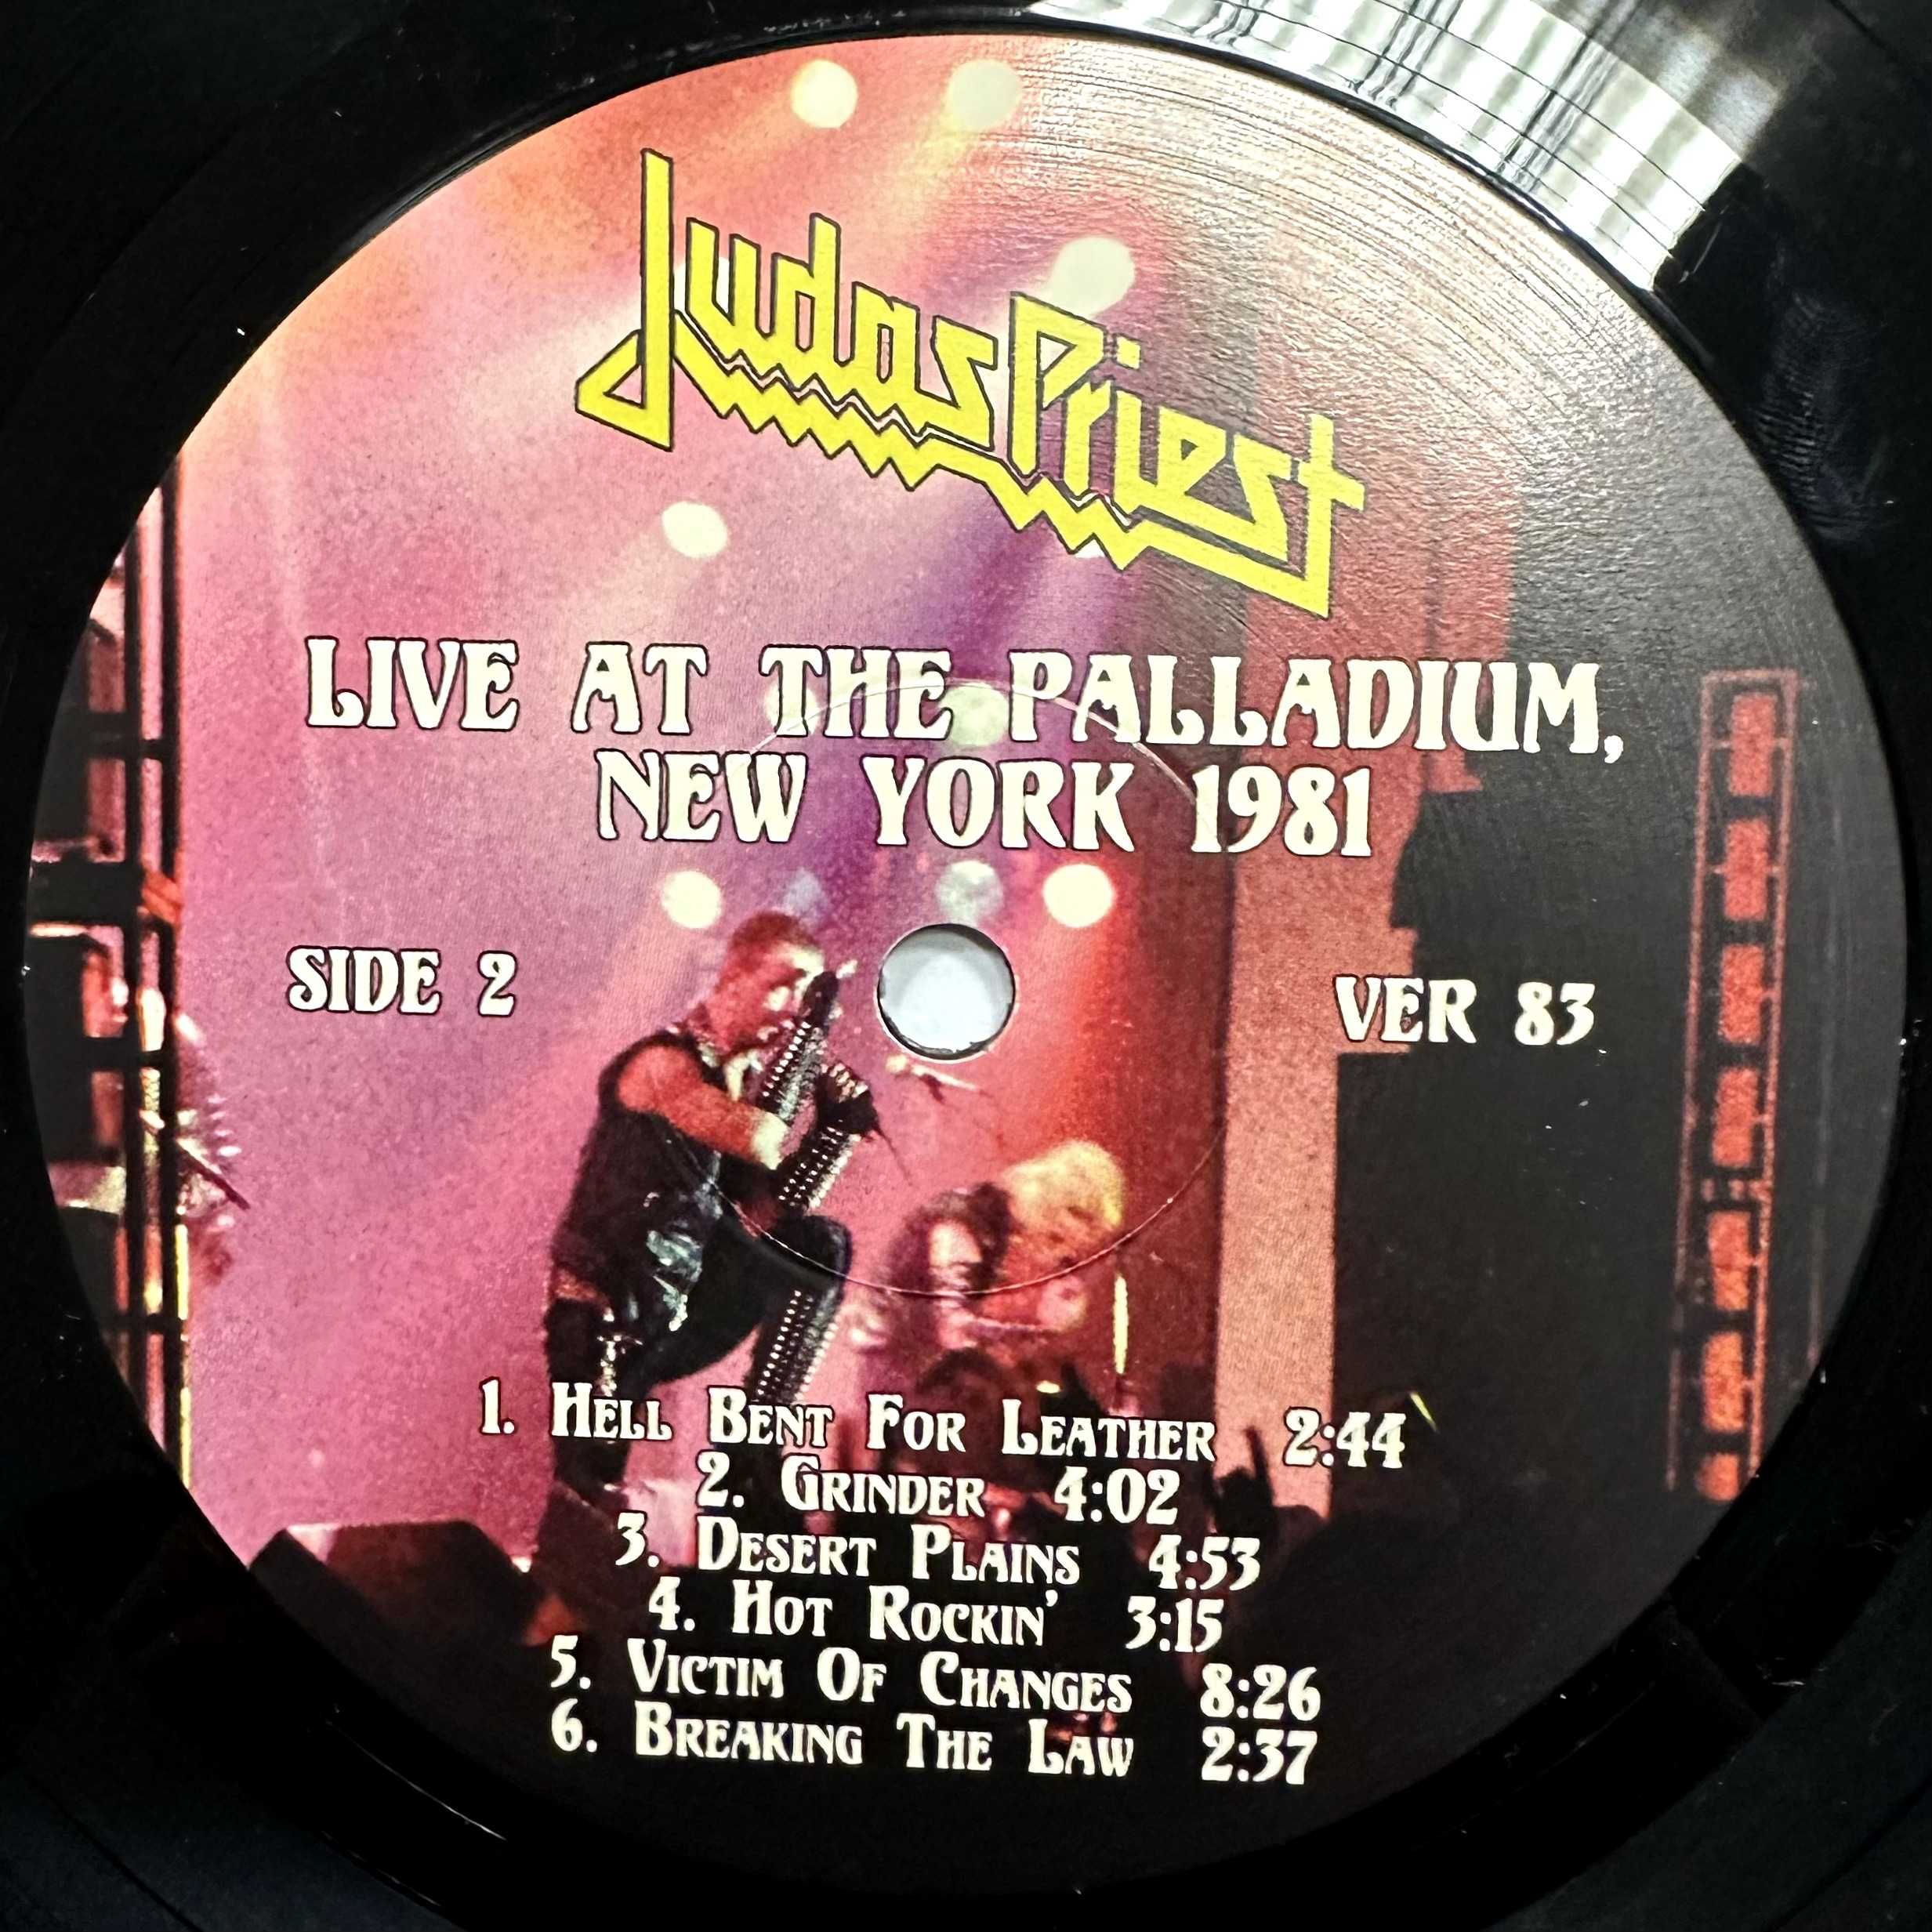 Judas Priest - Live at the Palladium (Vinyl, 2020, France)